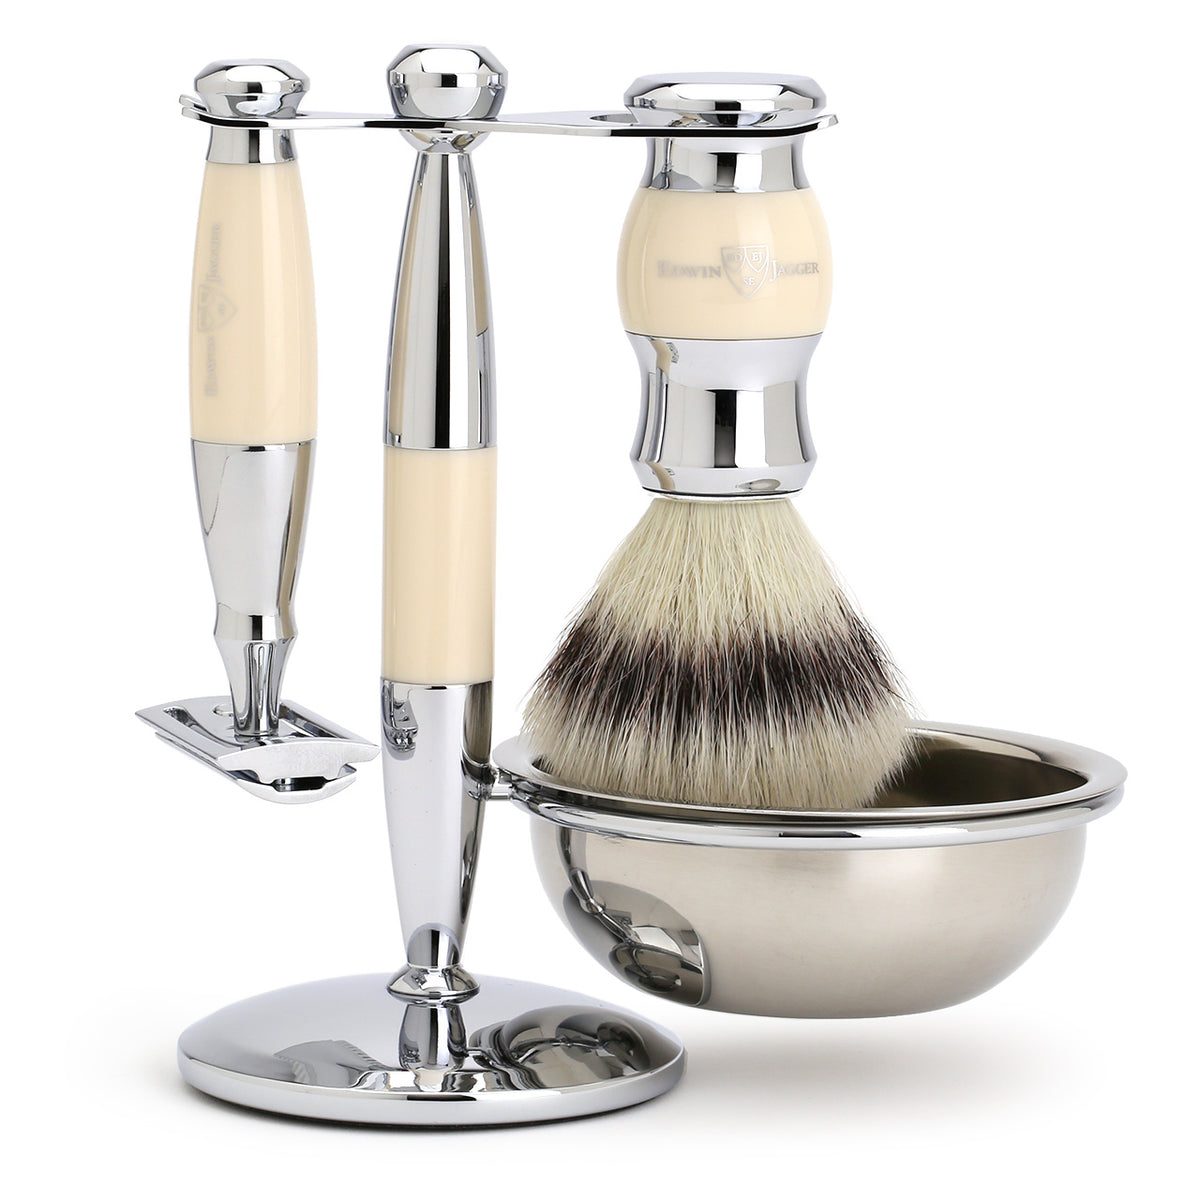 Edwin Jagger Shaving Set with Shaving Brush, Safety Razor, Stand and Soap Bowl - Imitation Ivory